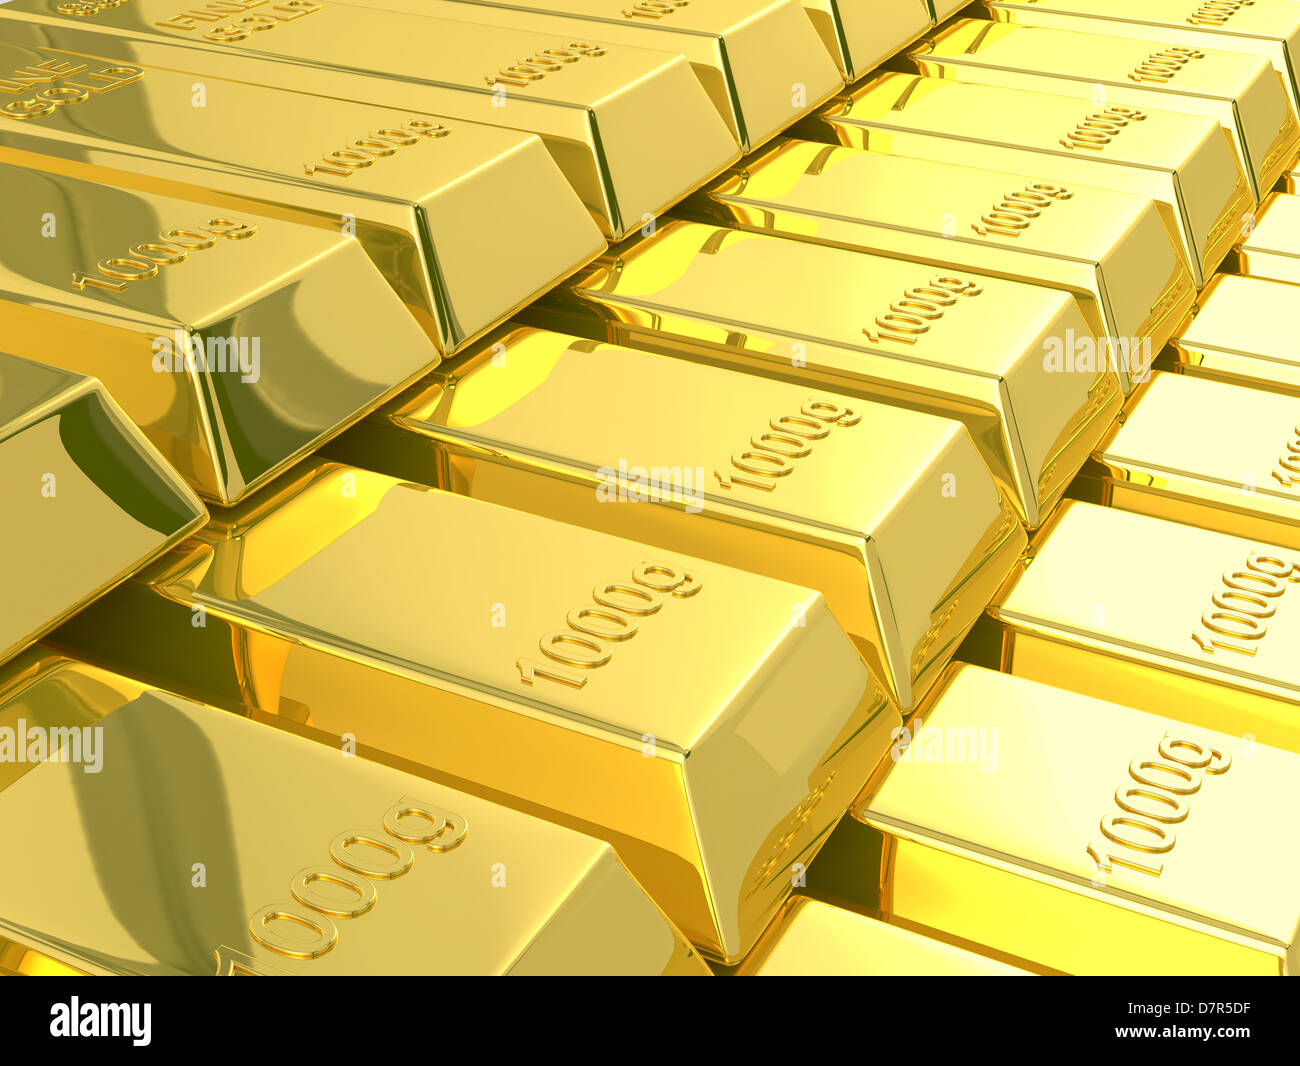 gold bars isolated on white background Stock Photo